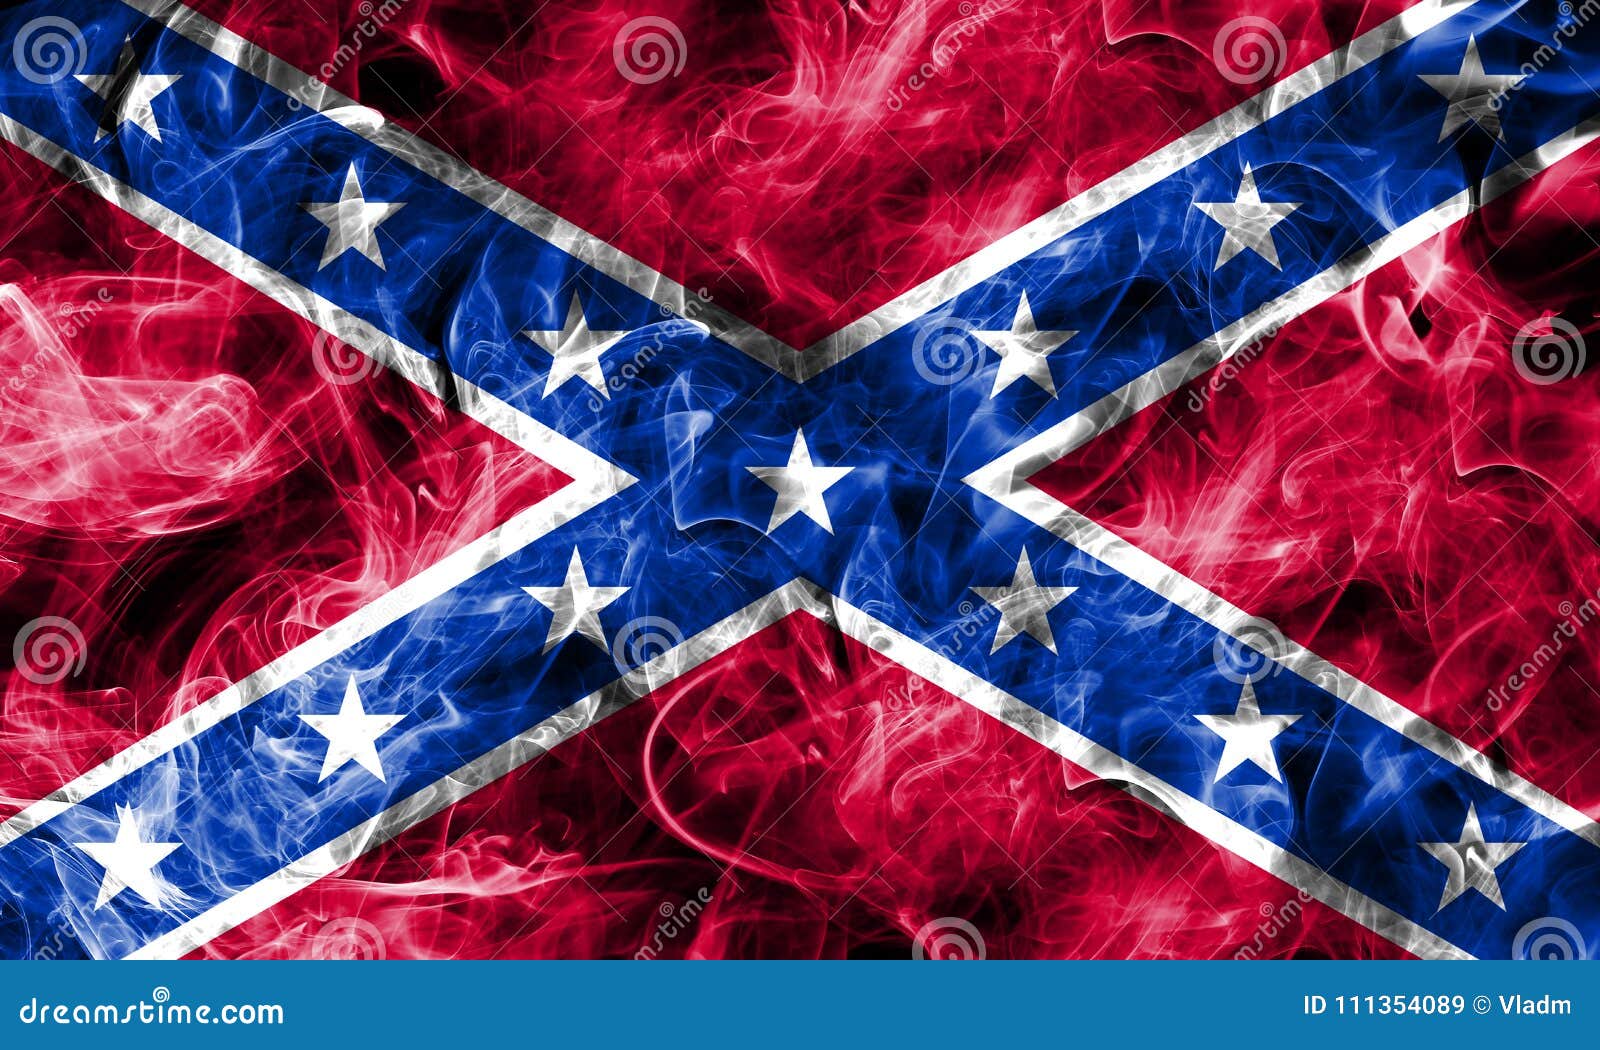 confederate flag, navy jack smoke flag